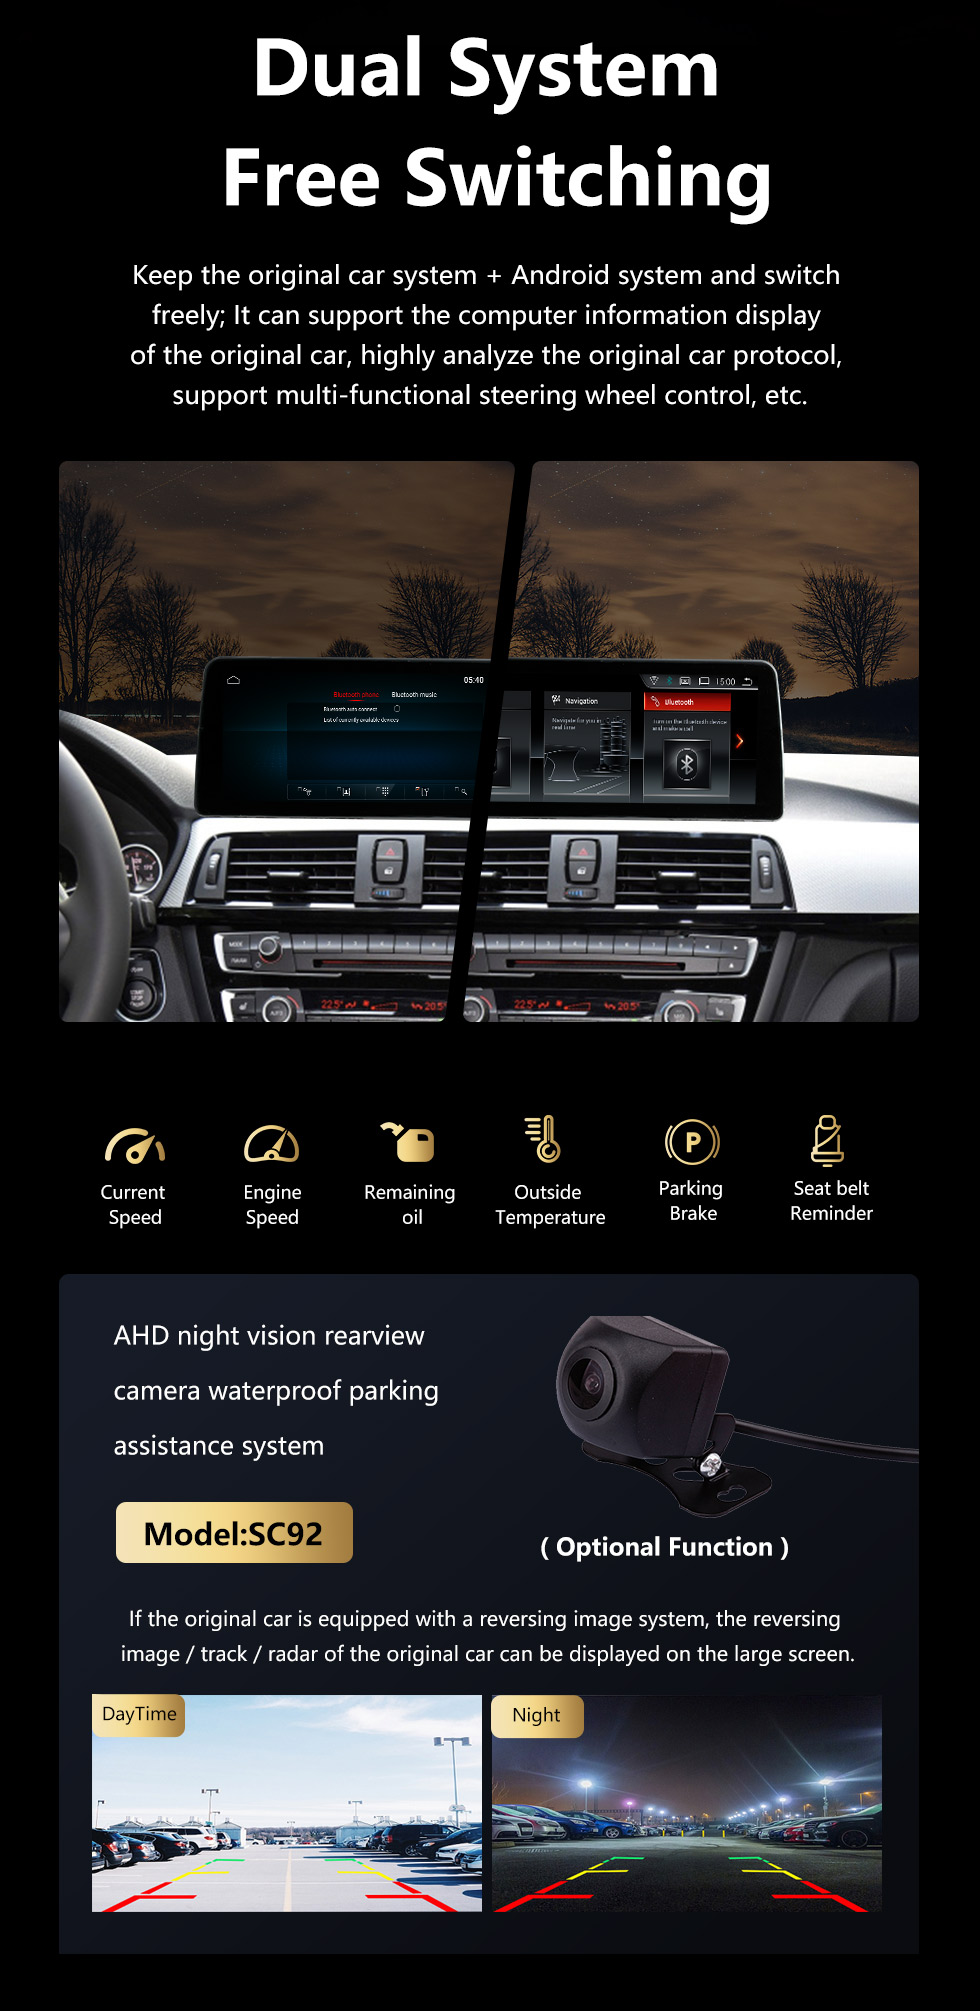 Seicane Android 10.0 10,25 дюйма для BMW 3 Series F30 / F31 / F34 / F35 (2013-2016) / BMW 4 Series F32 / F33 / F36 (2013-2016) EVO Radio HD Touchscreen GPS-навигационная система с поддержкой Bluetooth Carplay